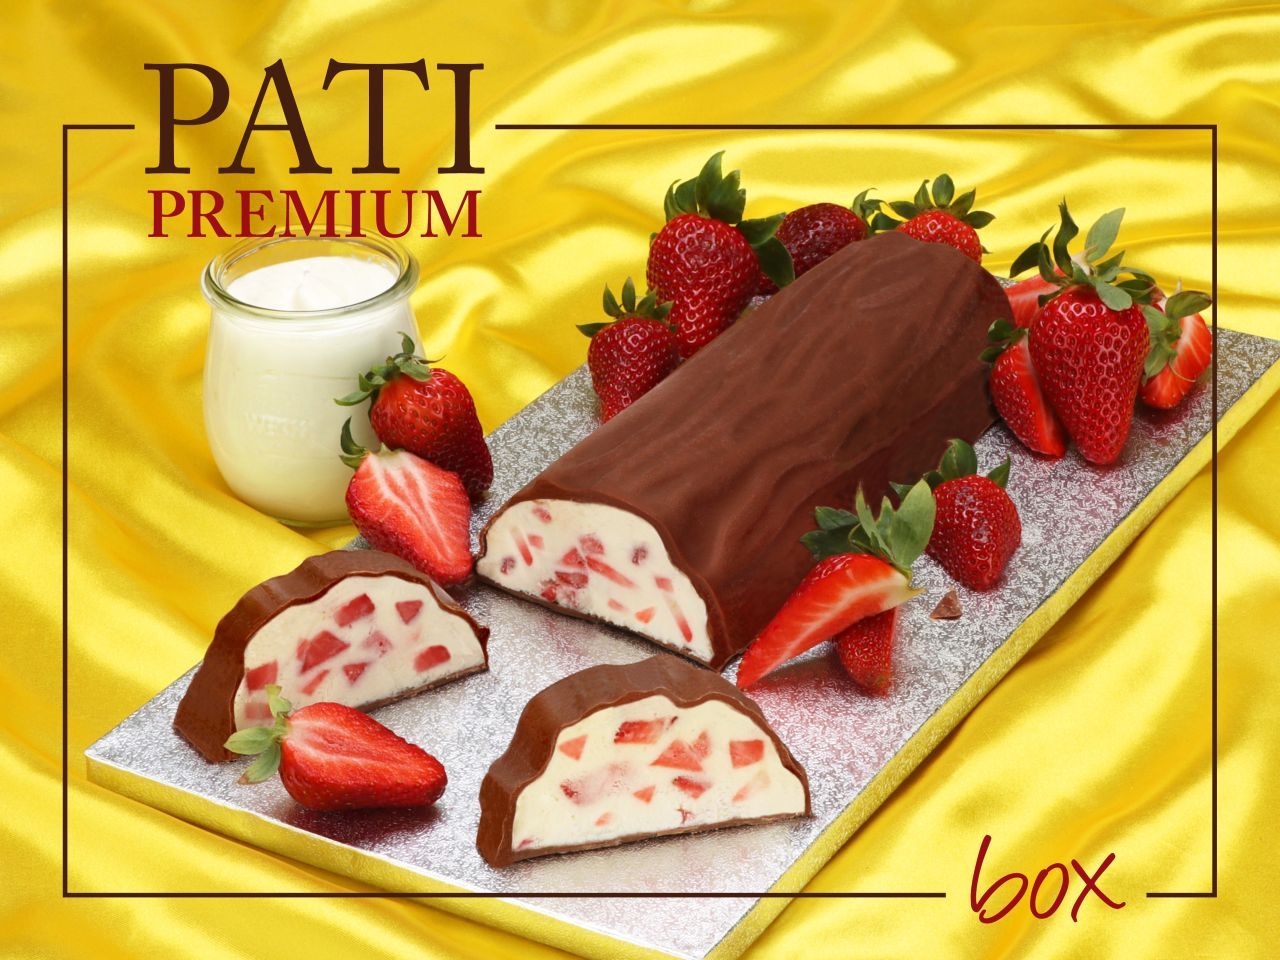 PATI-PREMIUM-BOX - Jahresabo von Pati-Versand